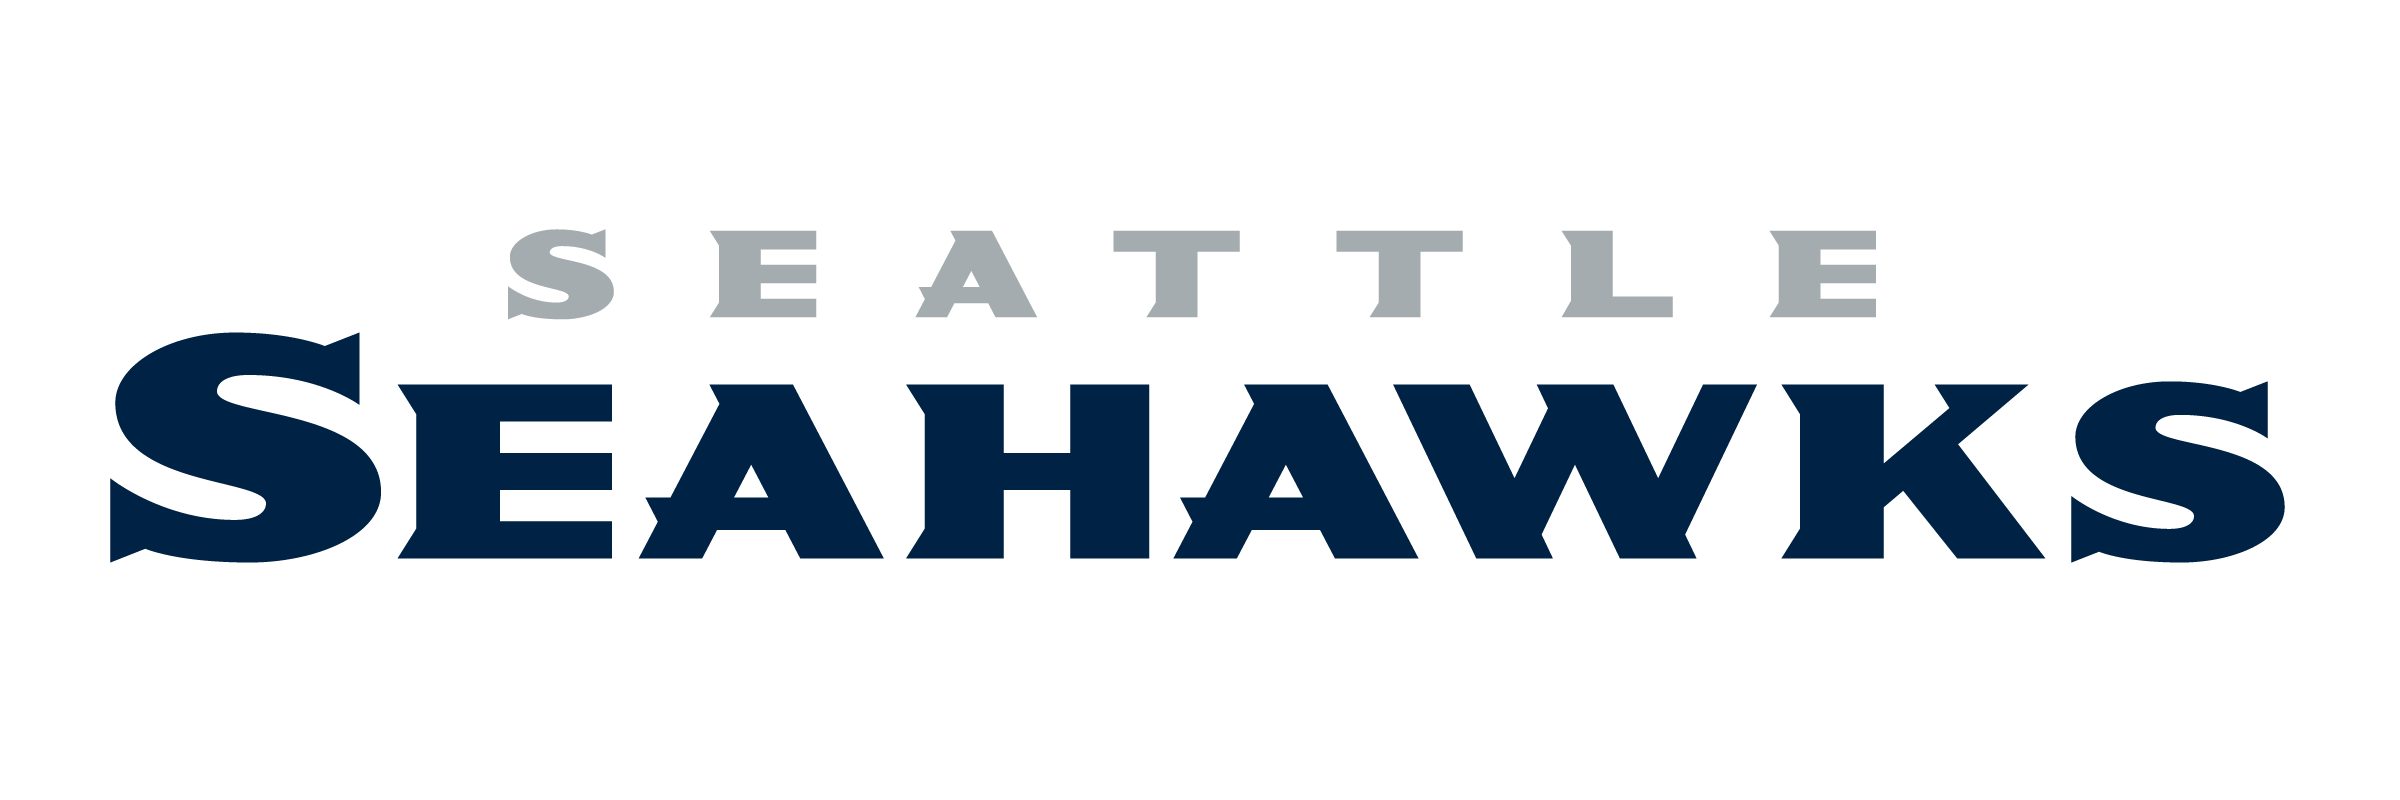 Seattle Seahawks Logo - Seattle Seahawks Logo PNG Transparent & SVG Vector - Freebie Supply